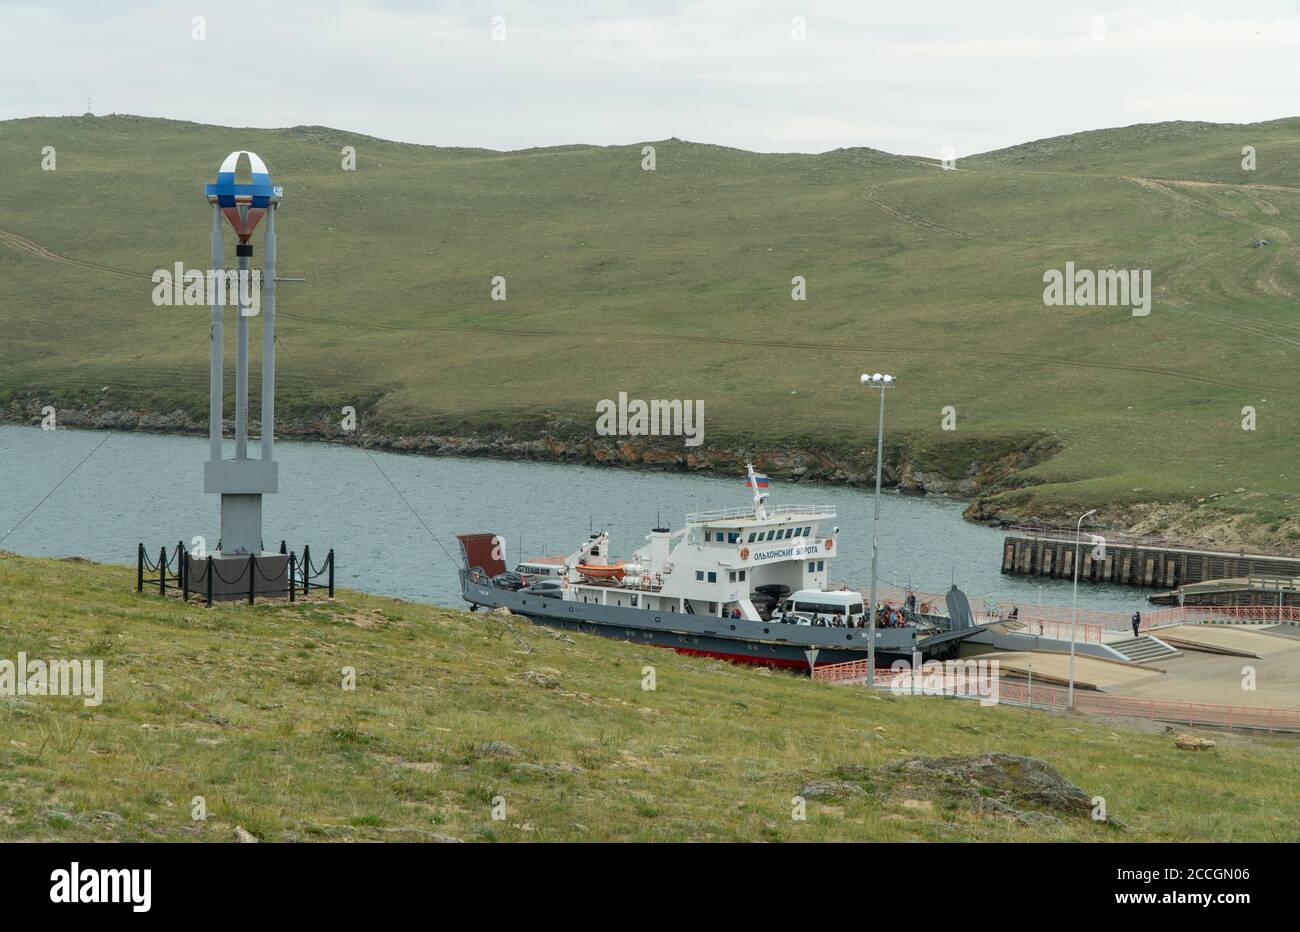 Russland, Region Irkutsk, Sachjurta, August 2020: Fährüberfahrt auf dem Baikalsee. Fracht- und Passagierfähre Olchon Gate. Stockfoto